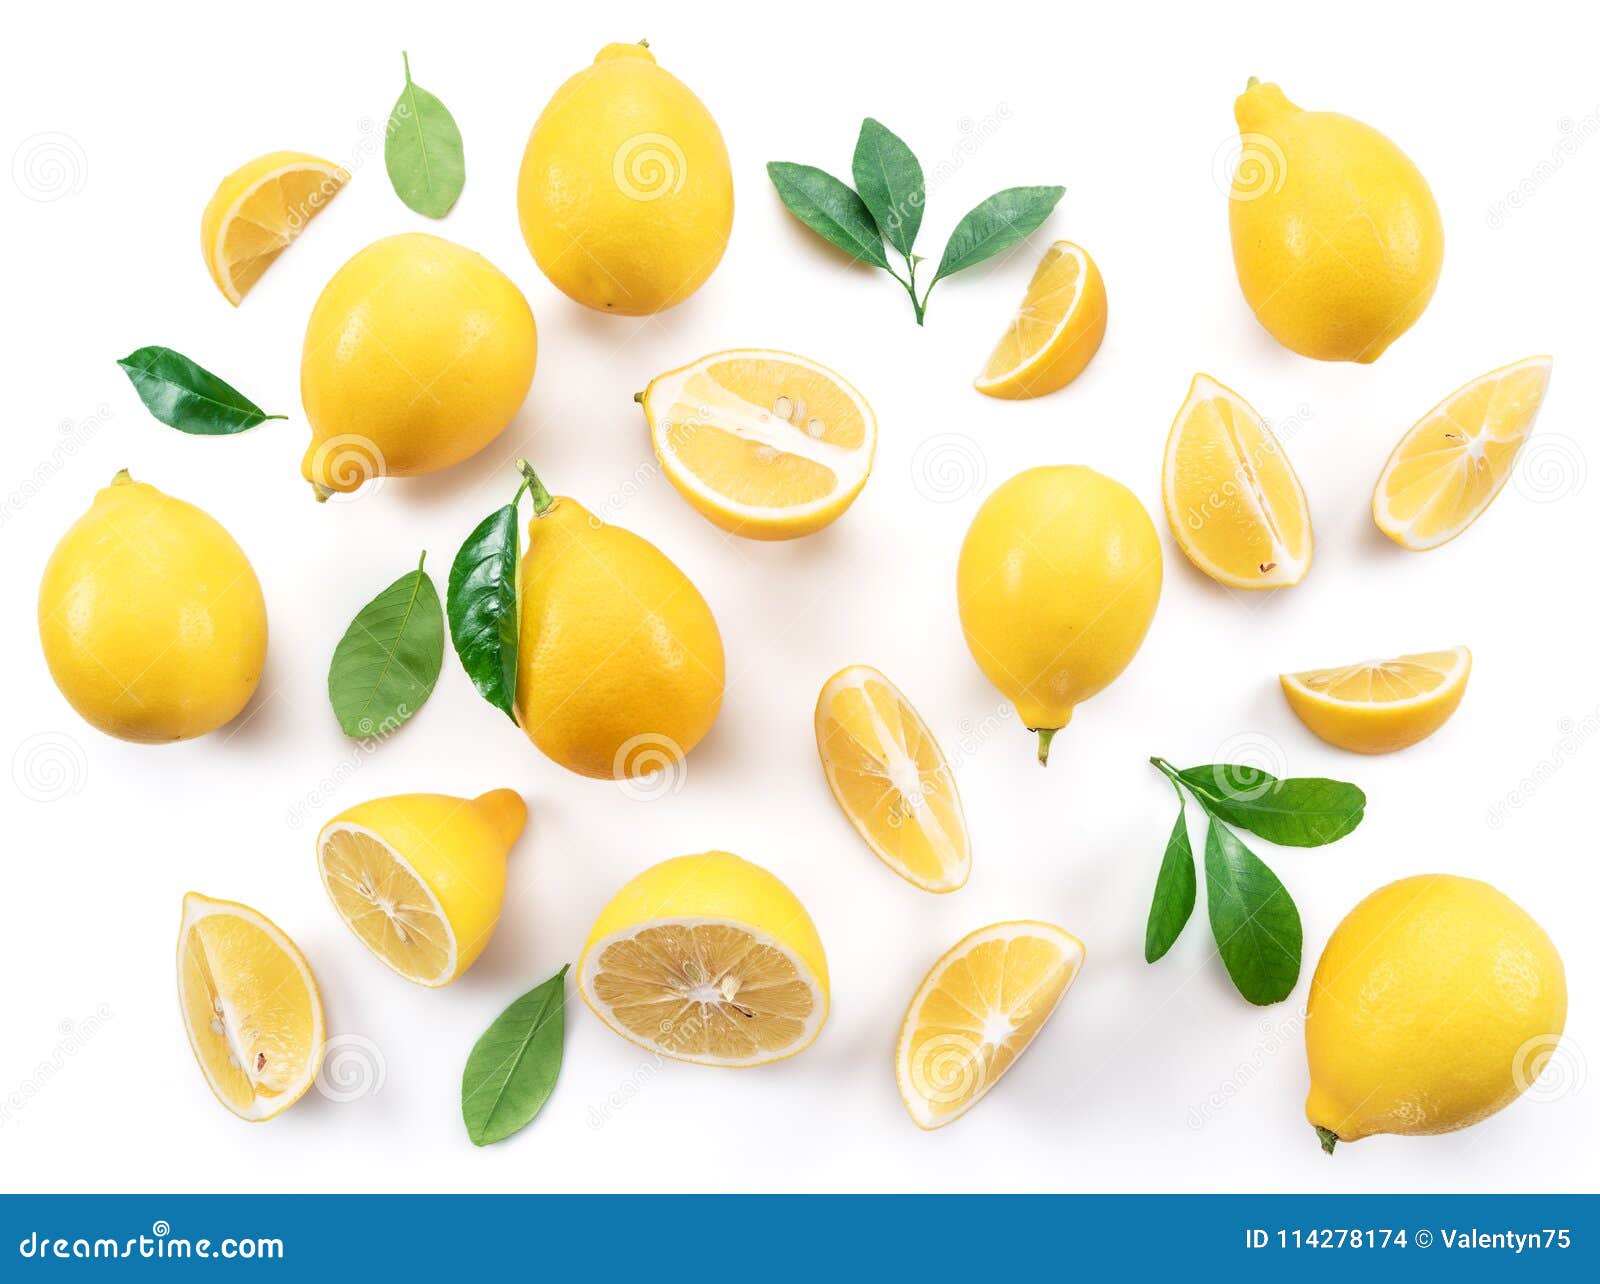 ripe lemons and lemon leaves on white background. top view.